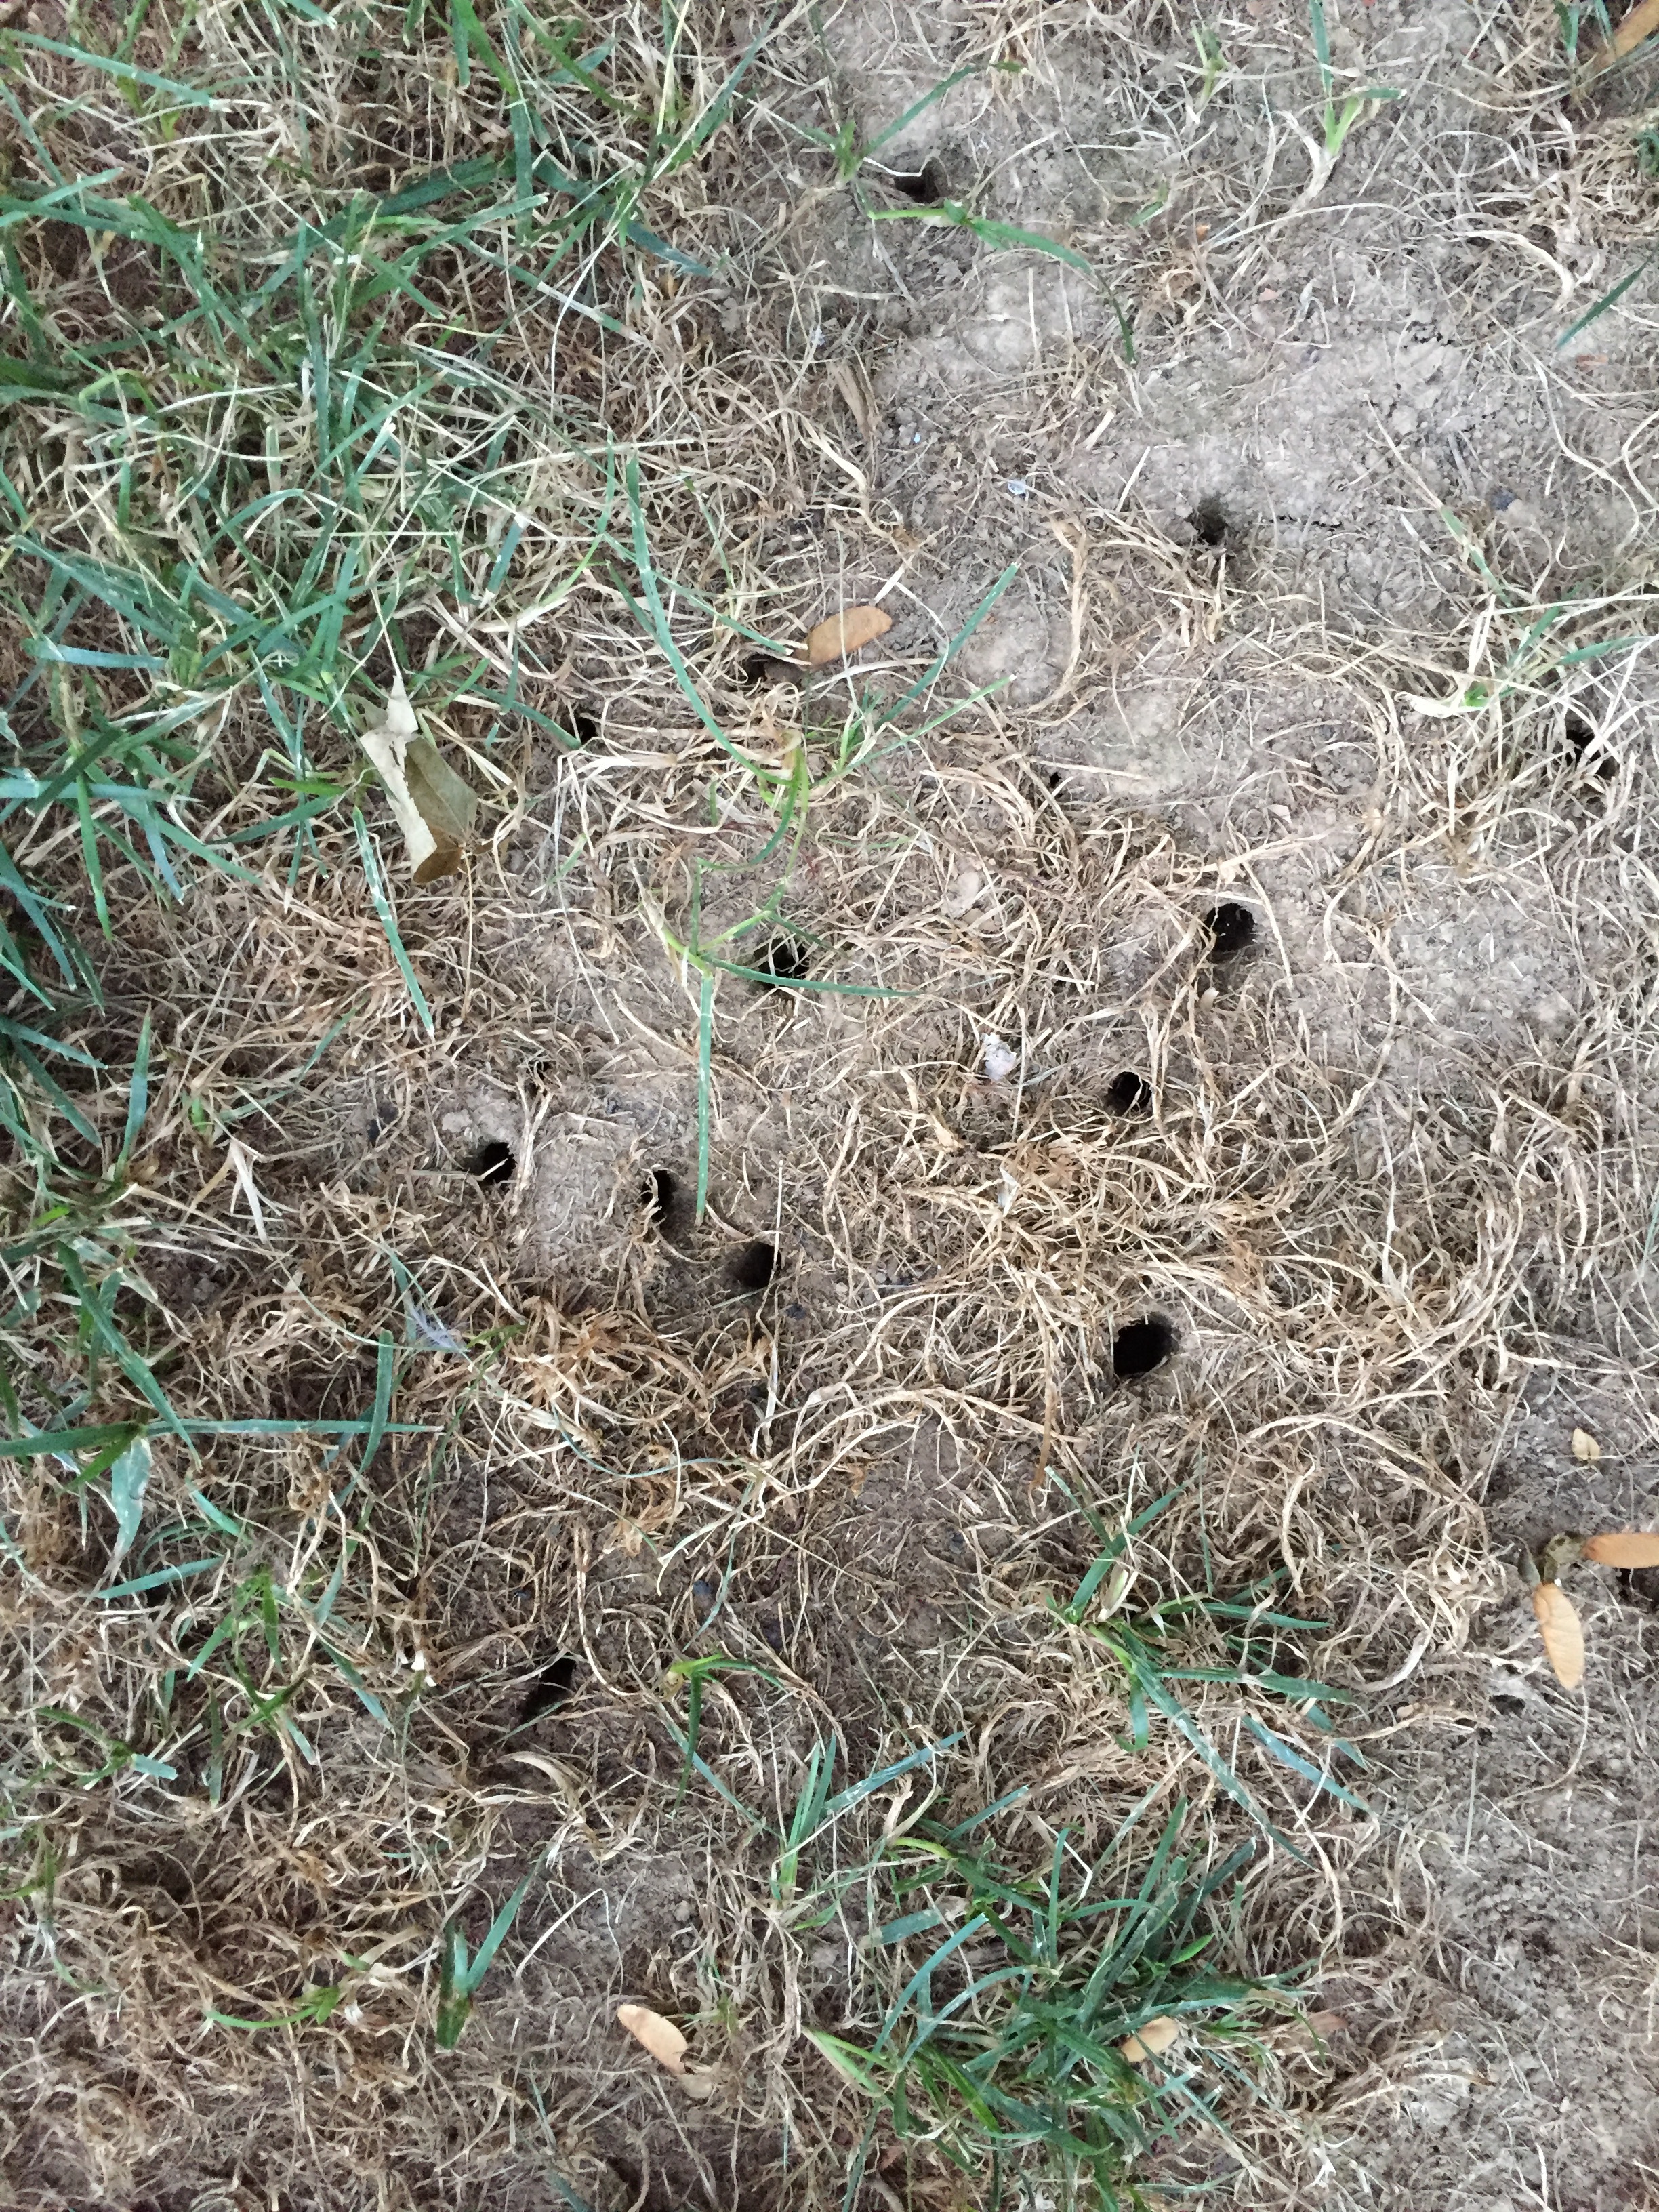 holes in my yard